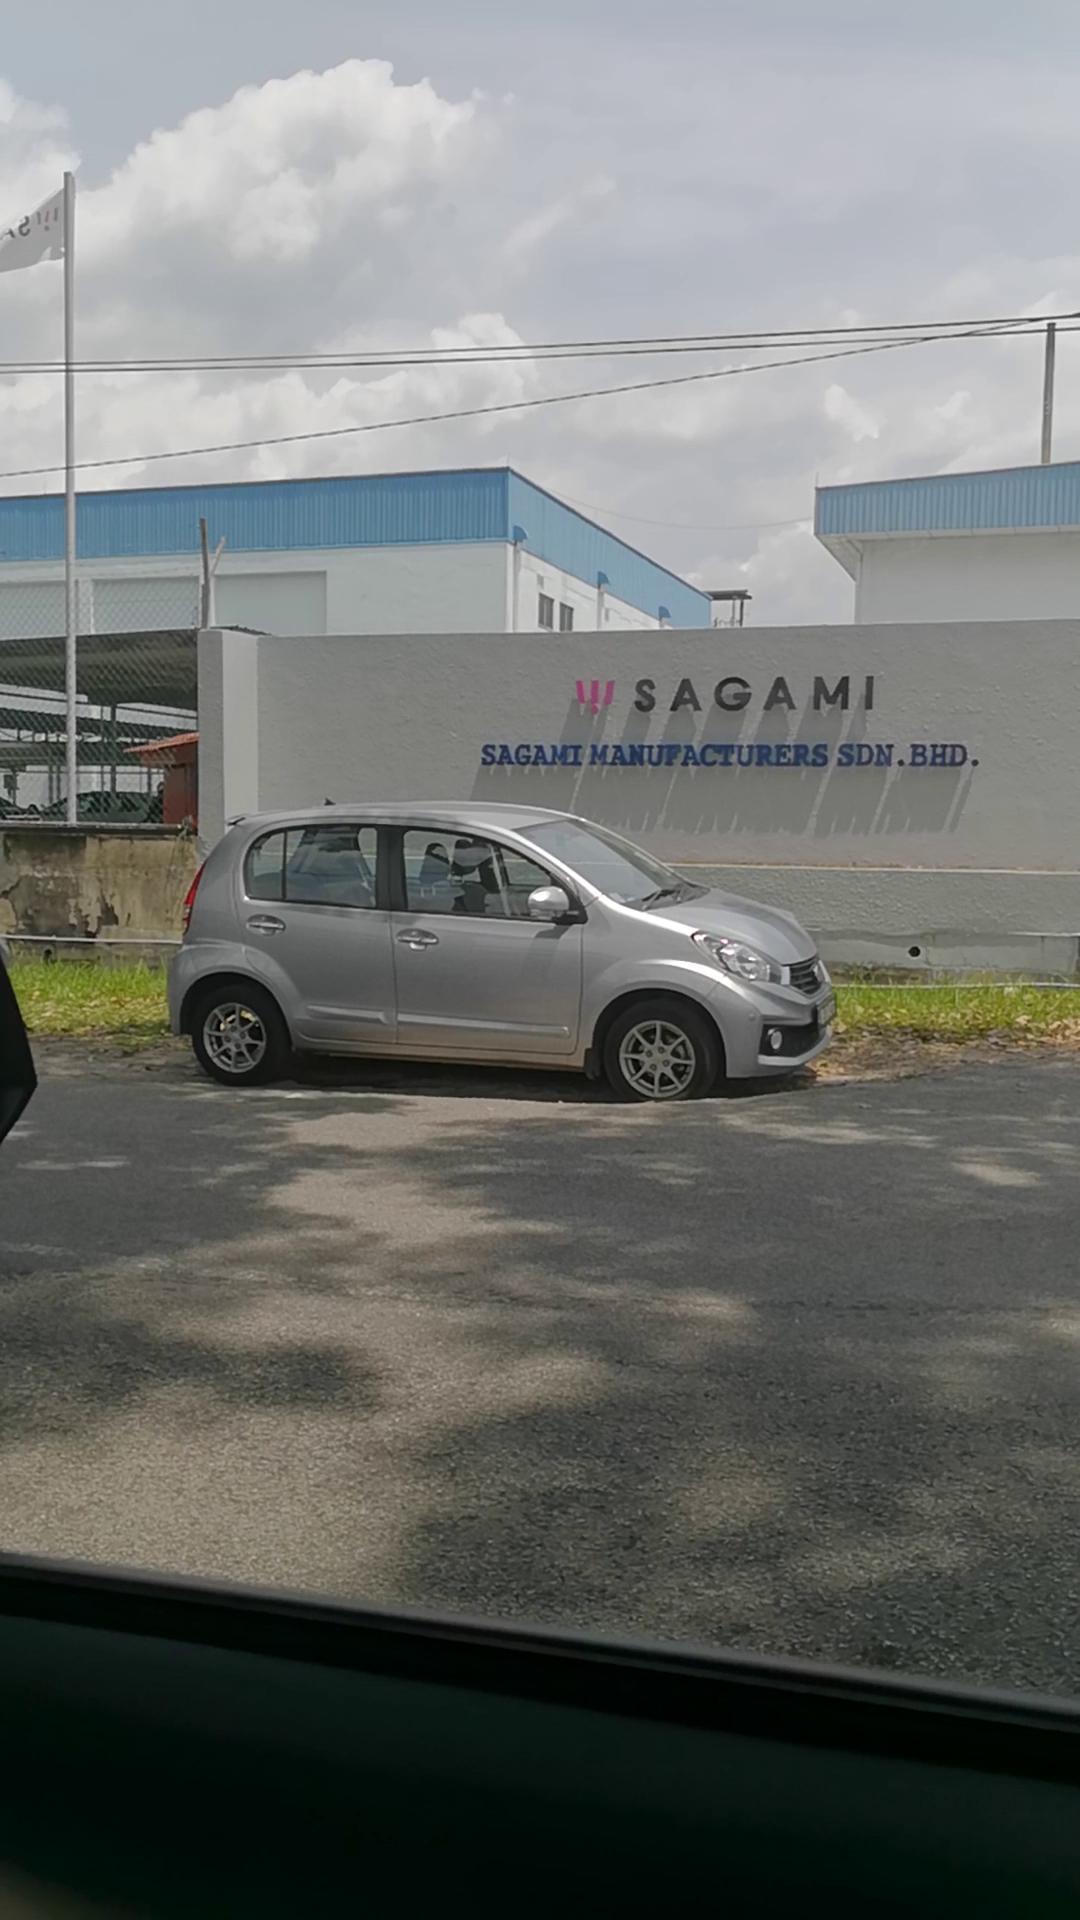 Sagami Manufacturers Sdn. Bhd.